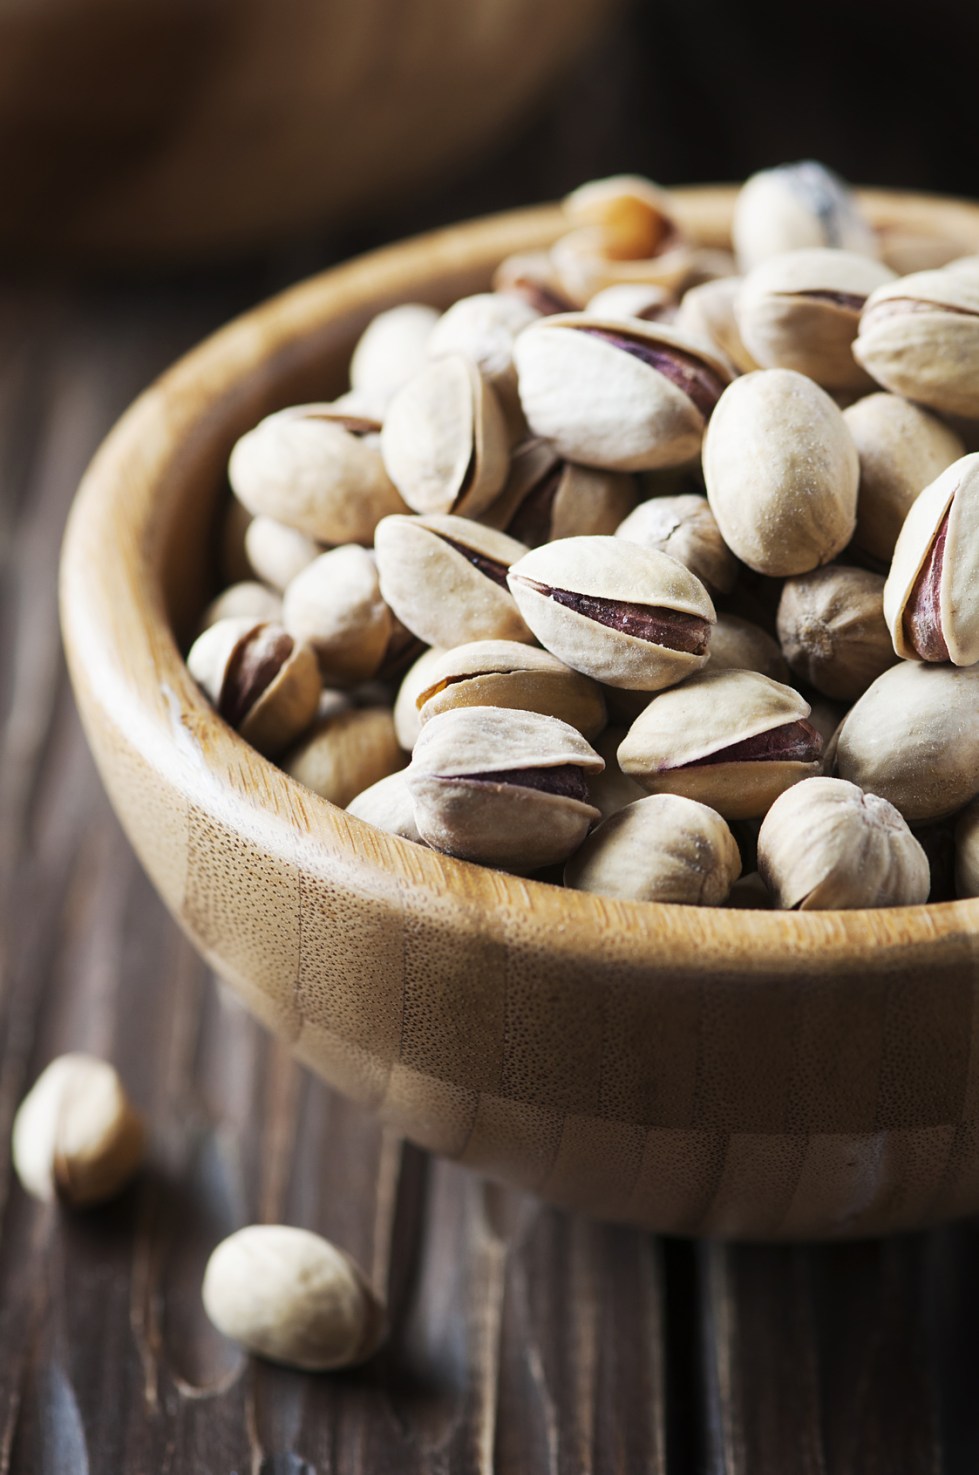 Salt pistachio nuts in the wooden bowl